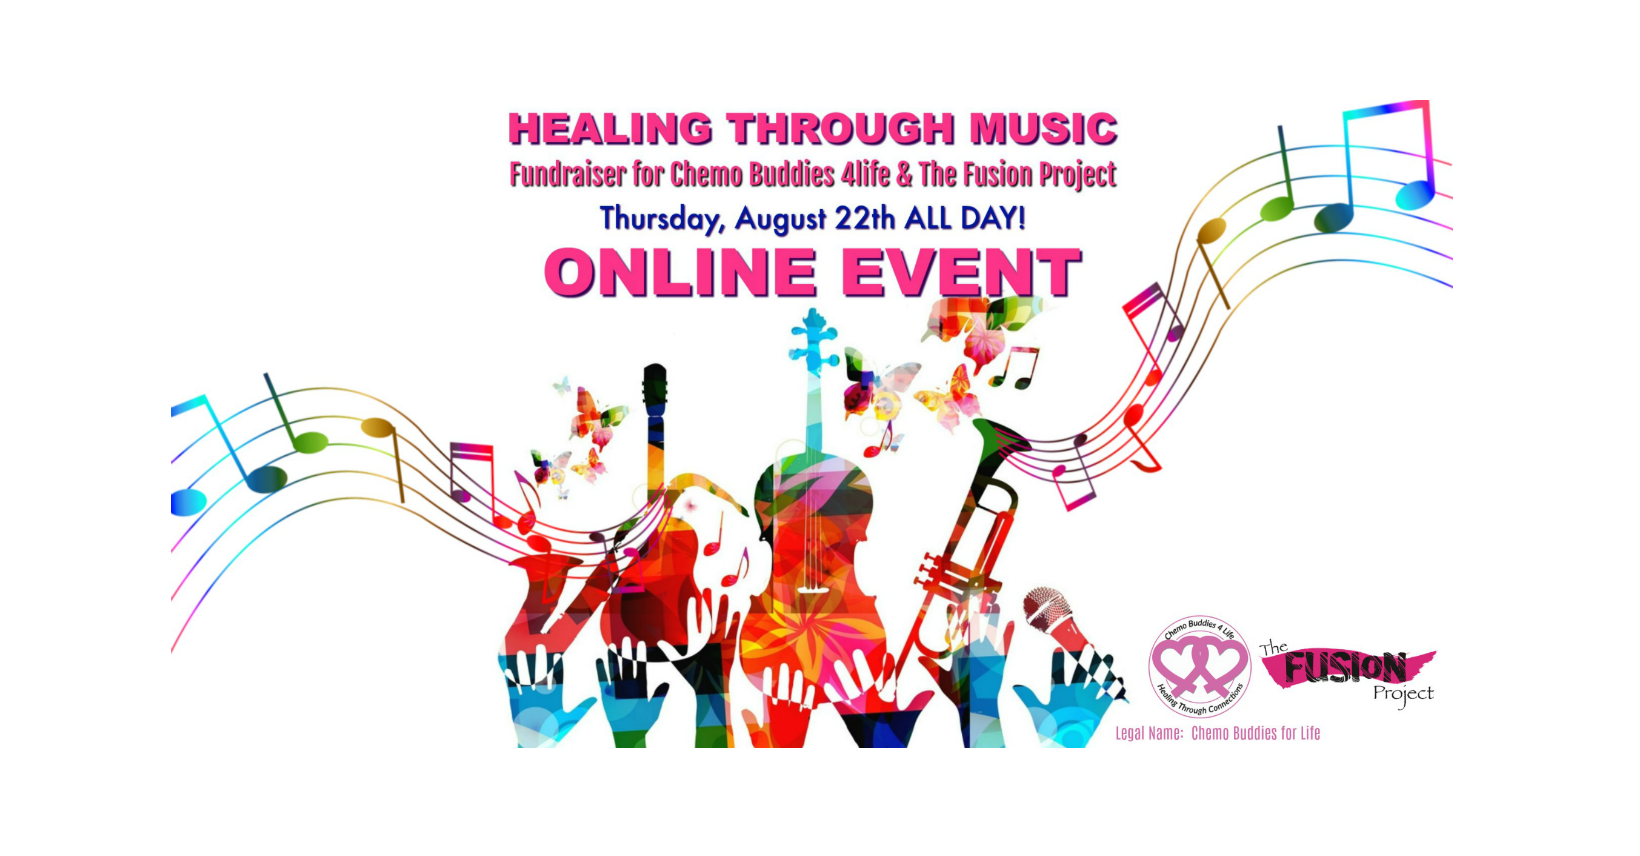 Healing Through Music by Chemo Buddies 4life